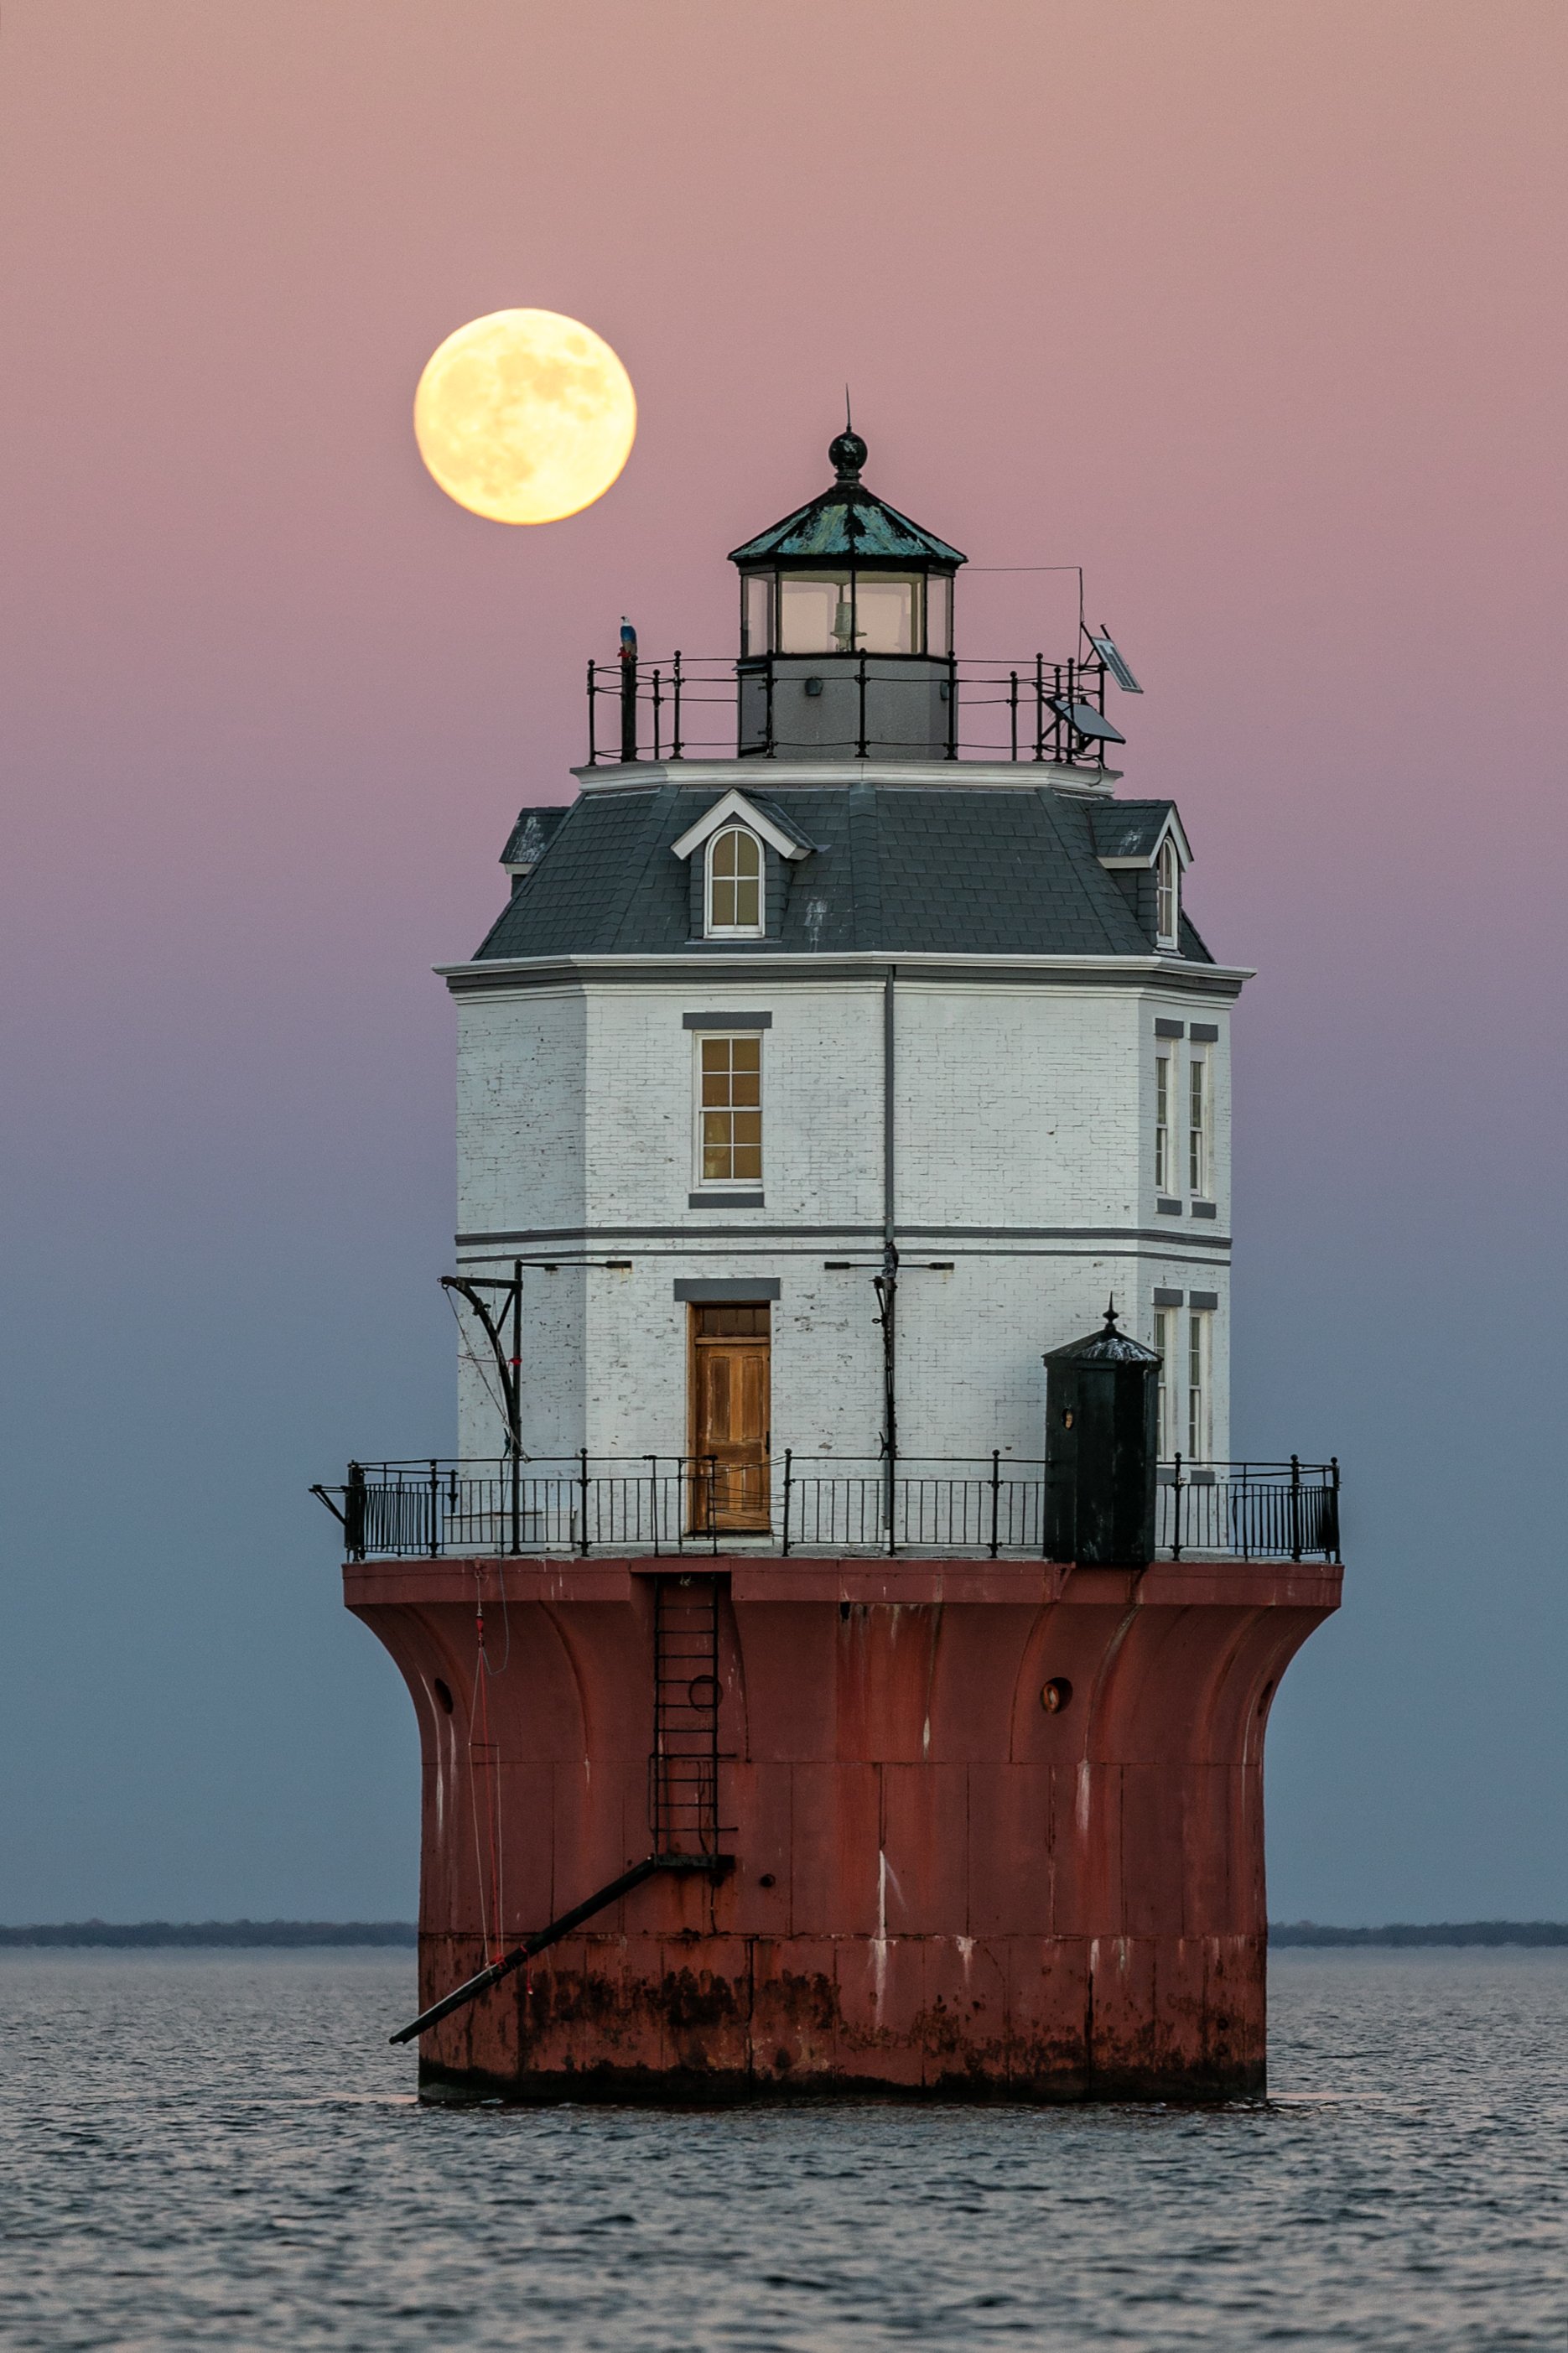 3rd - Full Moon Rising at Baltimore Harbor Light